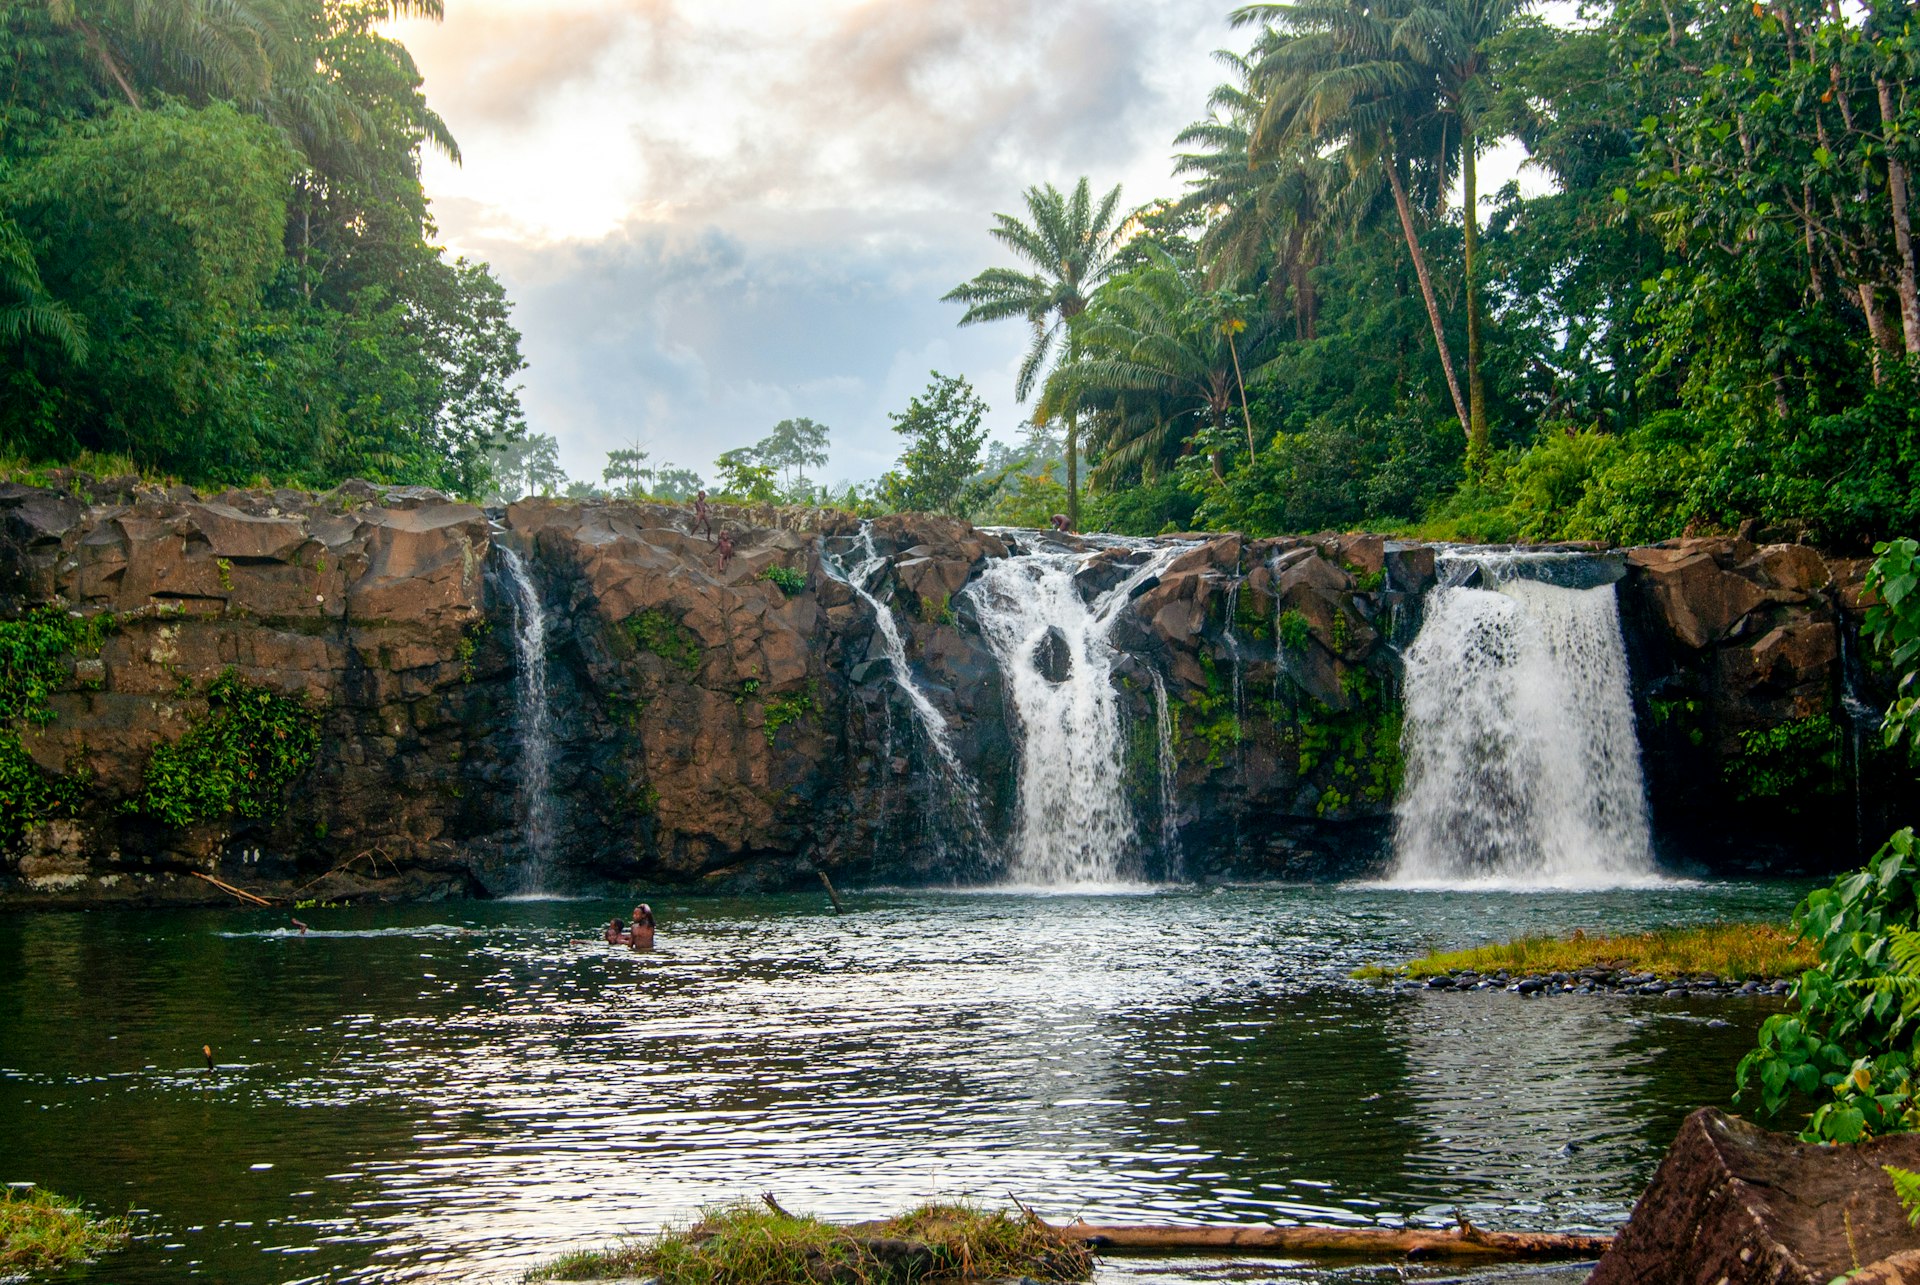 People swim below a beautiful waterfall in a lush forest. 